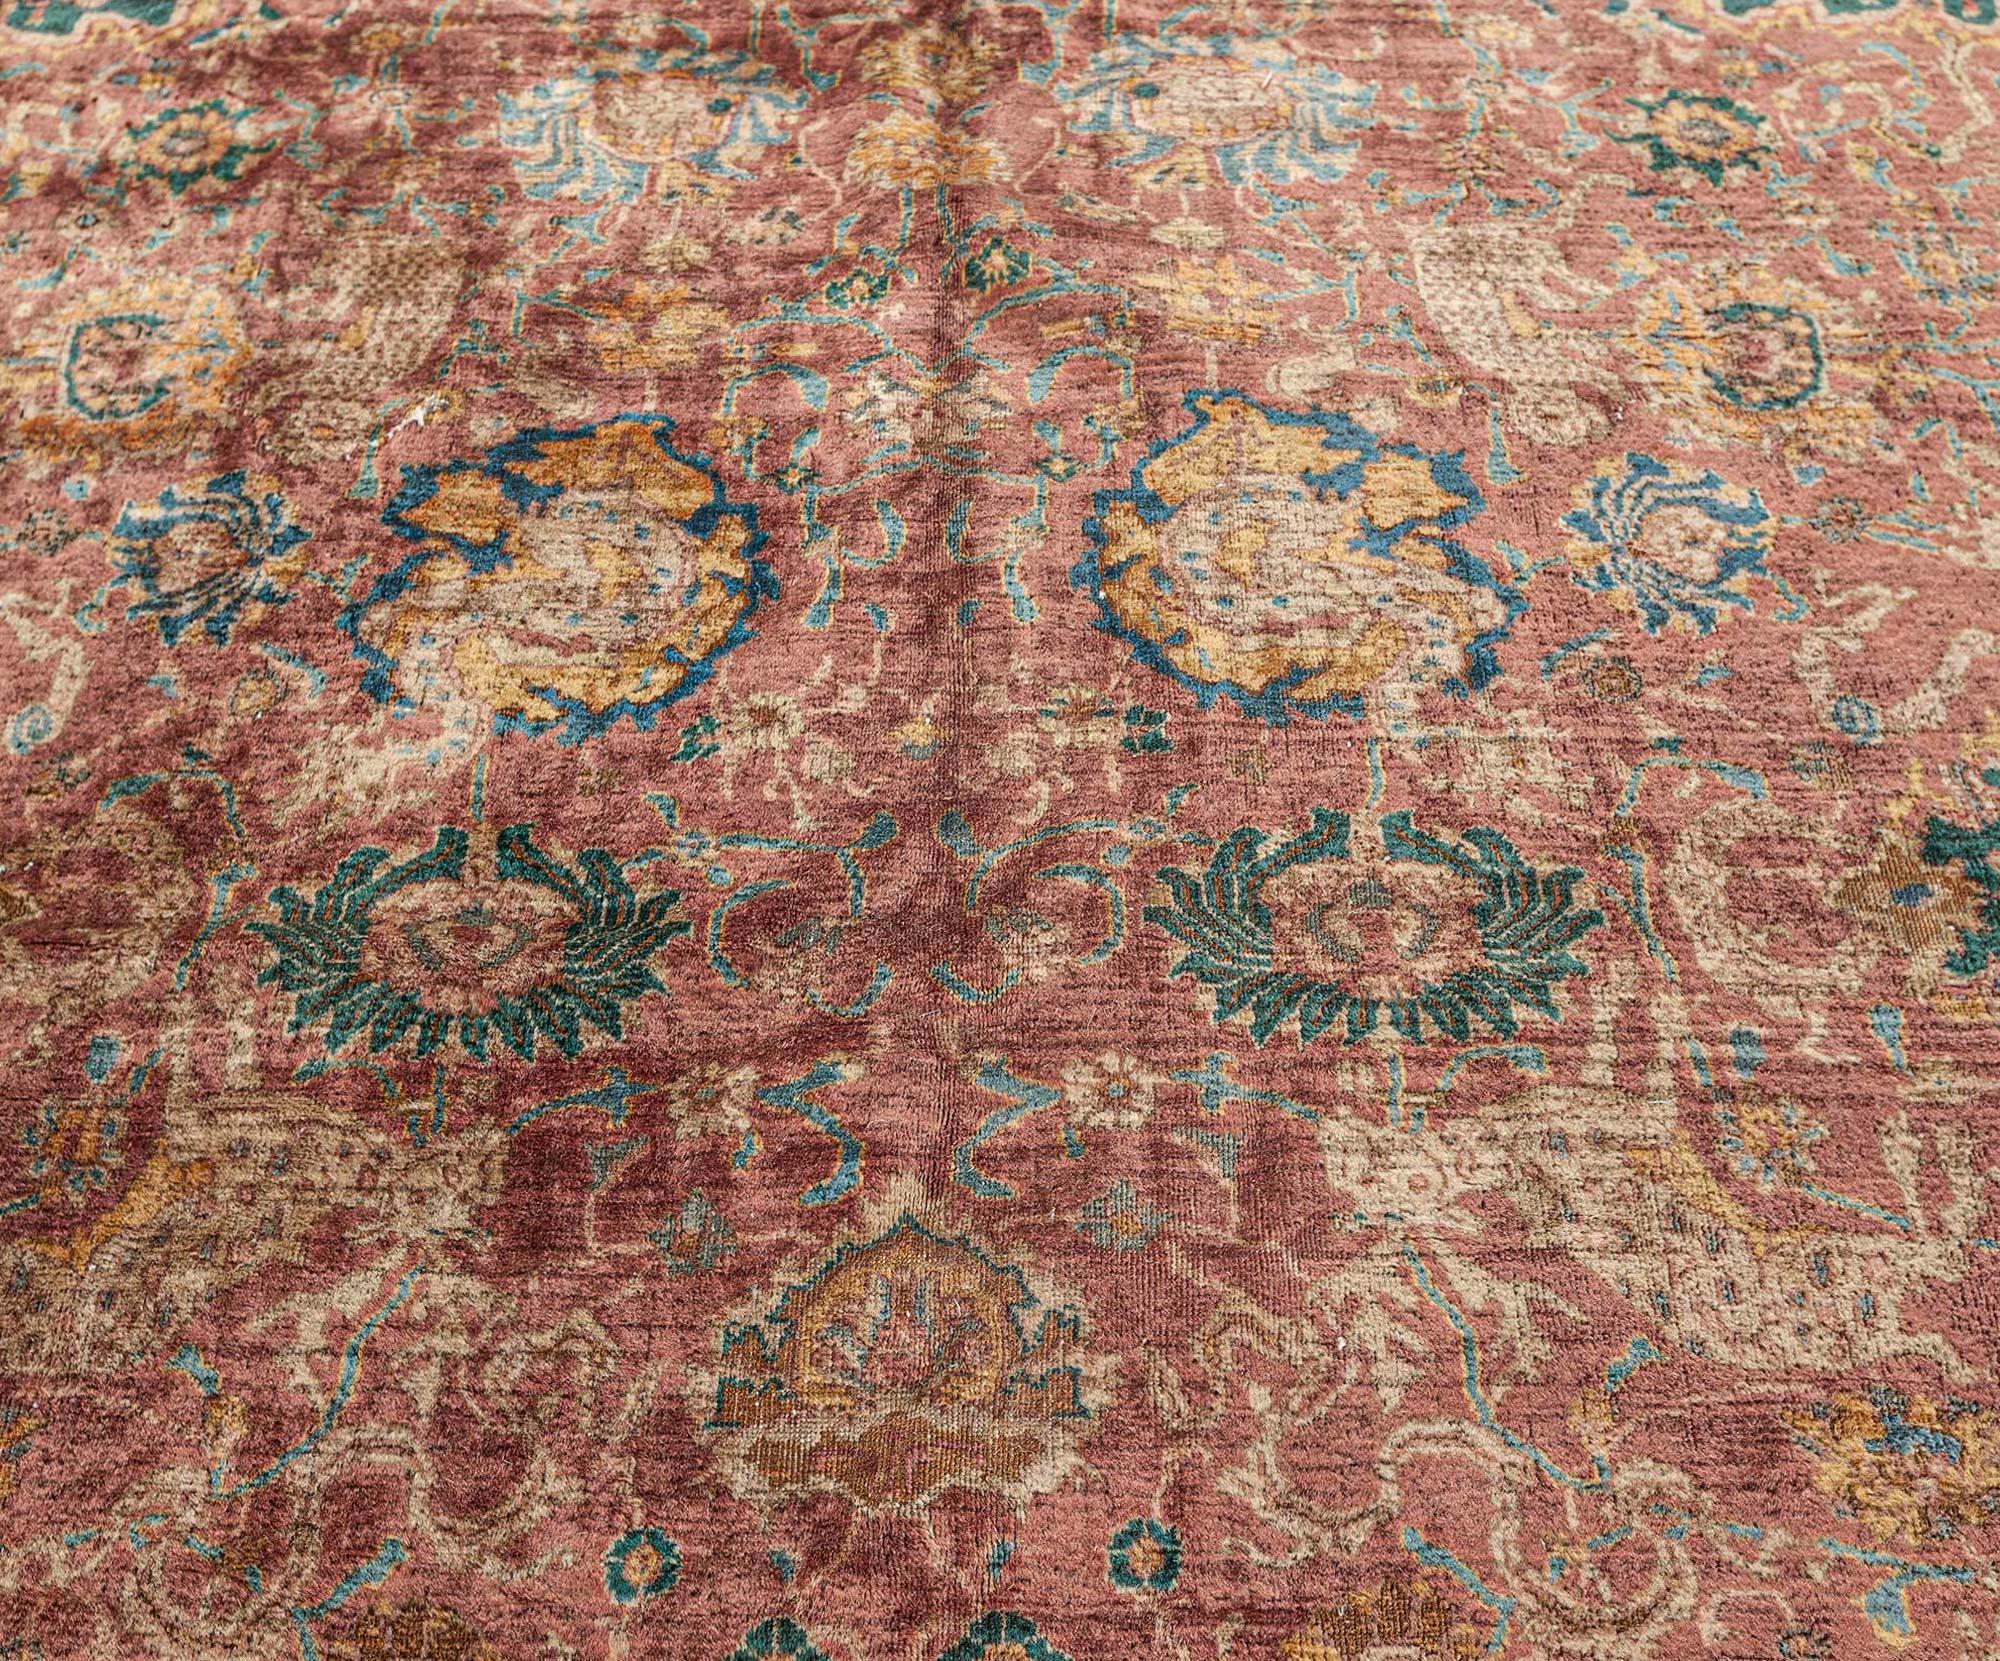 Antique Indian handmade wool carpet
Size: 10'1